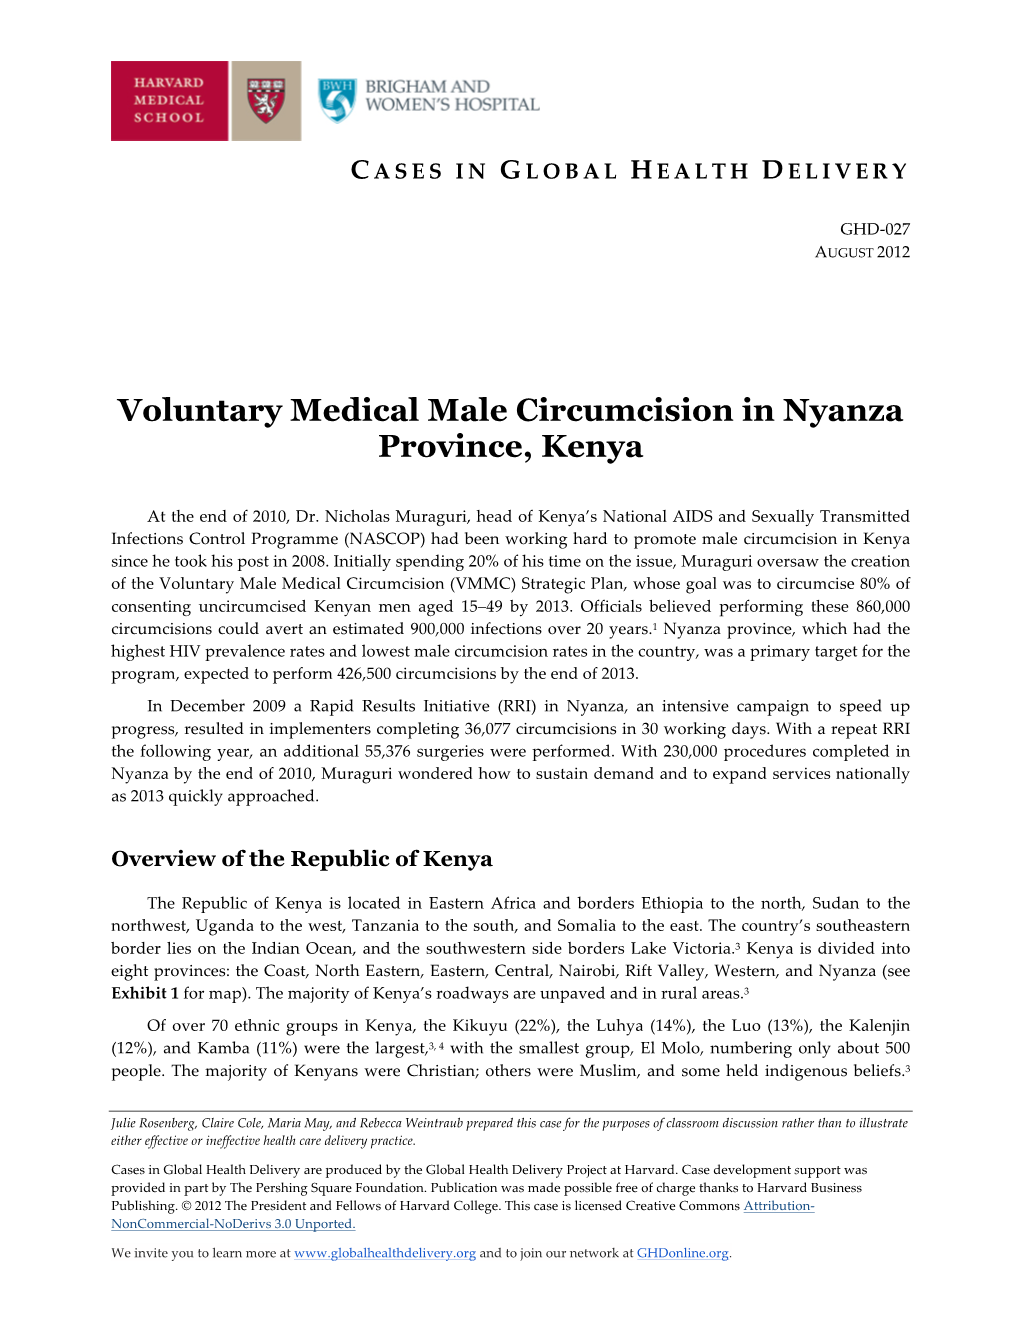 Download GHD-027 Kenya's VMMC Program